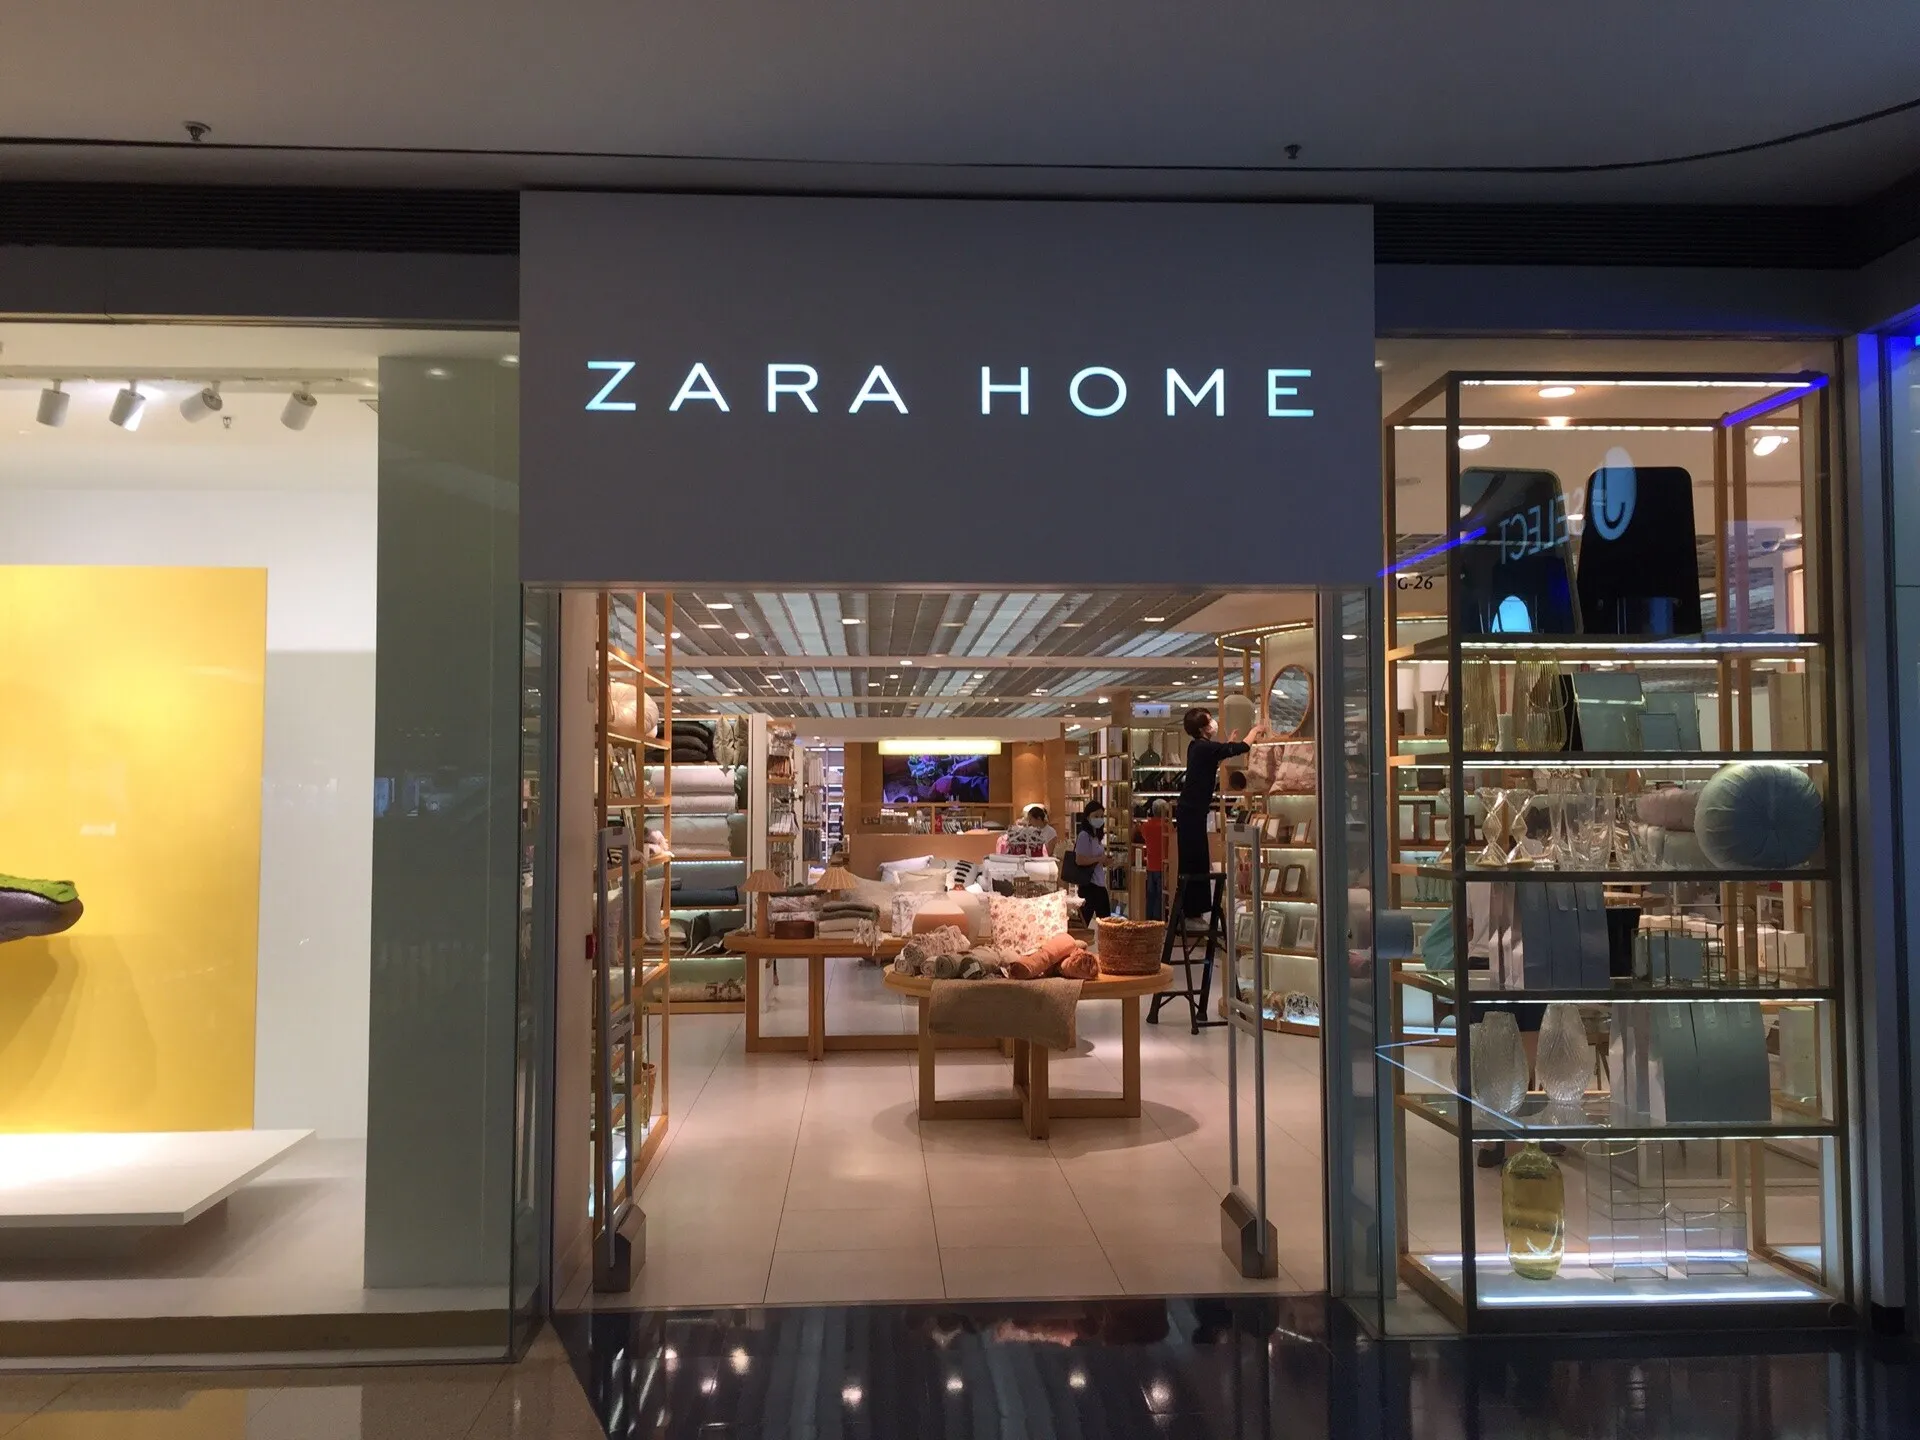 Zara Home in Thailand, central_asia | Home Decor - Country Helper